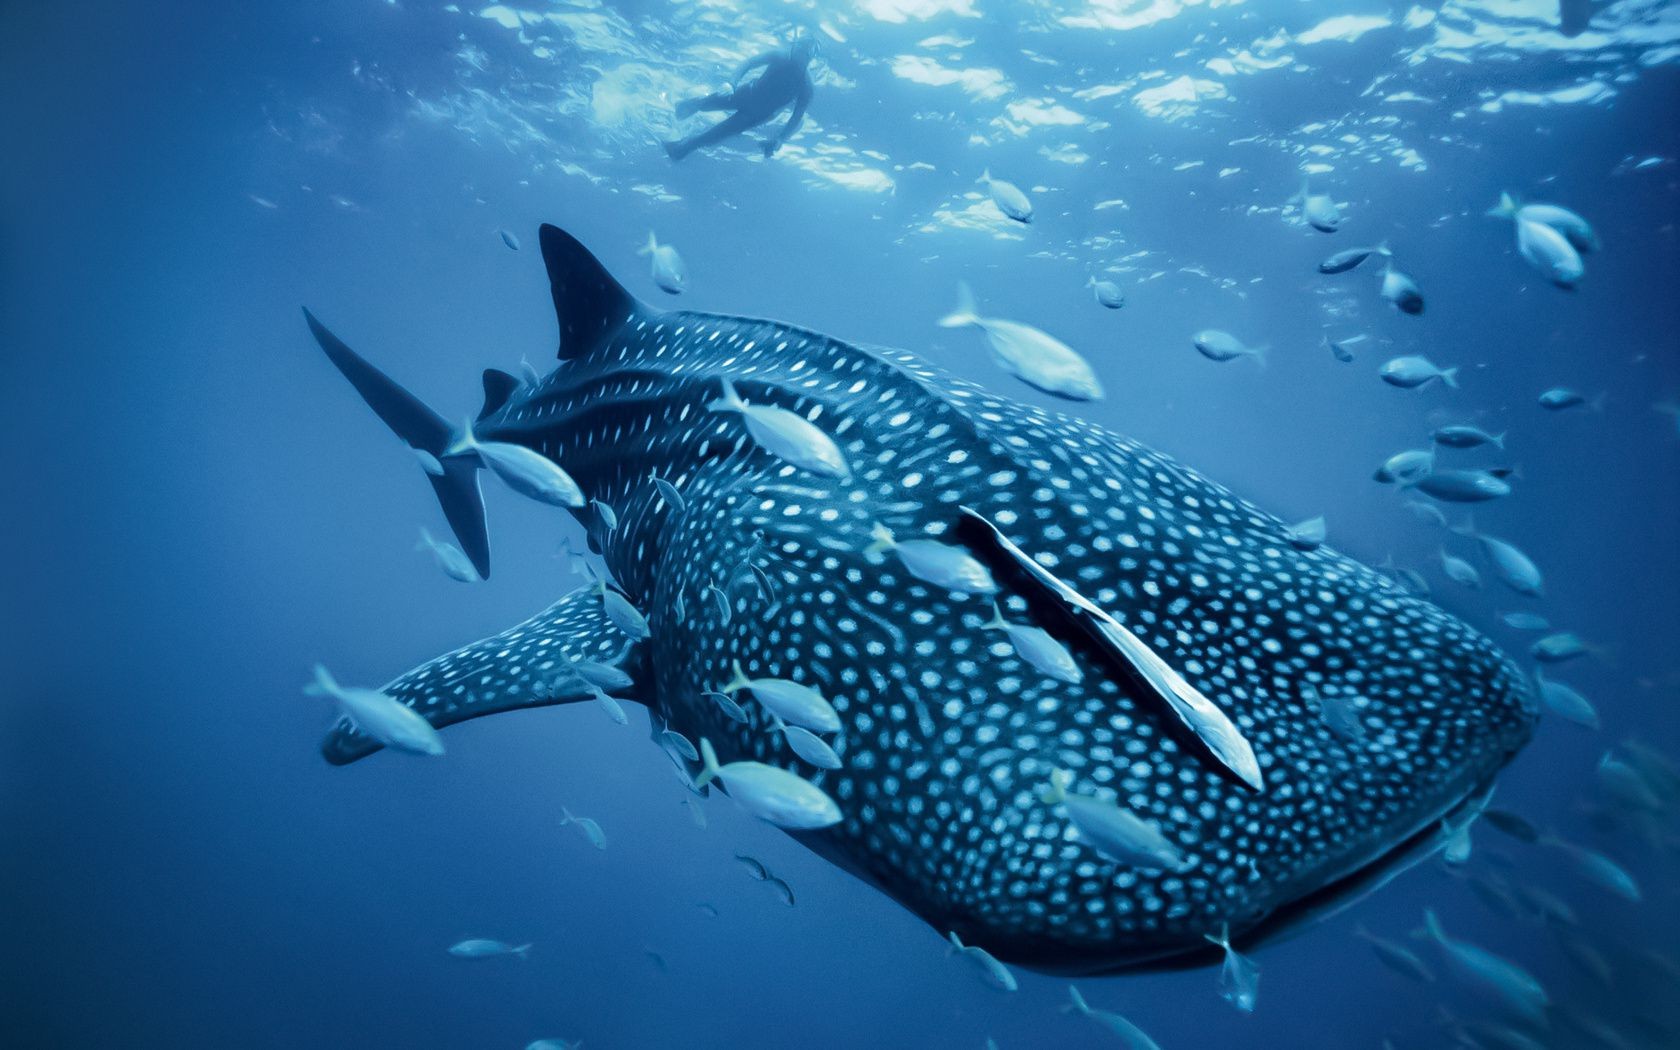 animals underwater fish swimming water shark diving submarine coral ocean tropical reef sea snorkeling wildlife